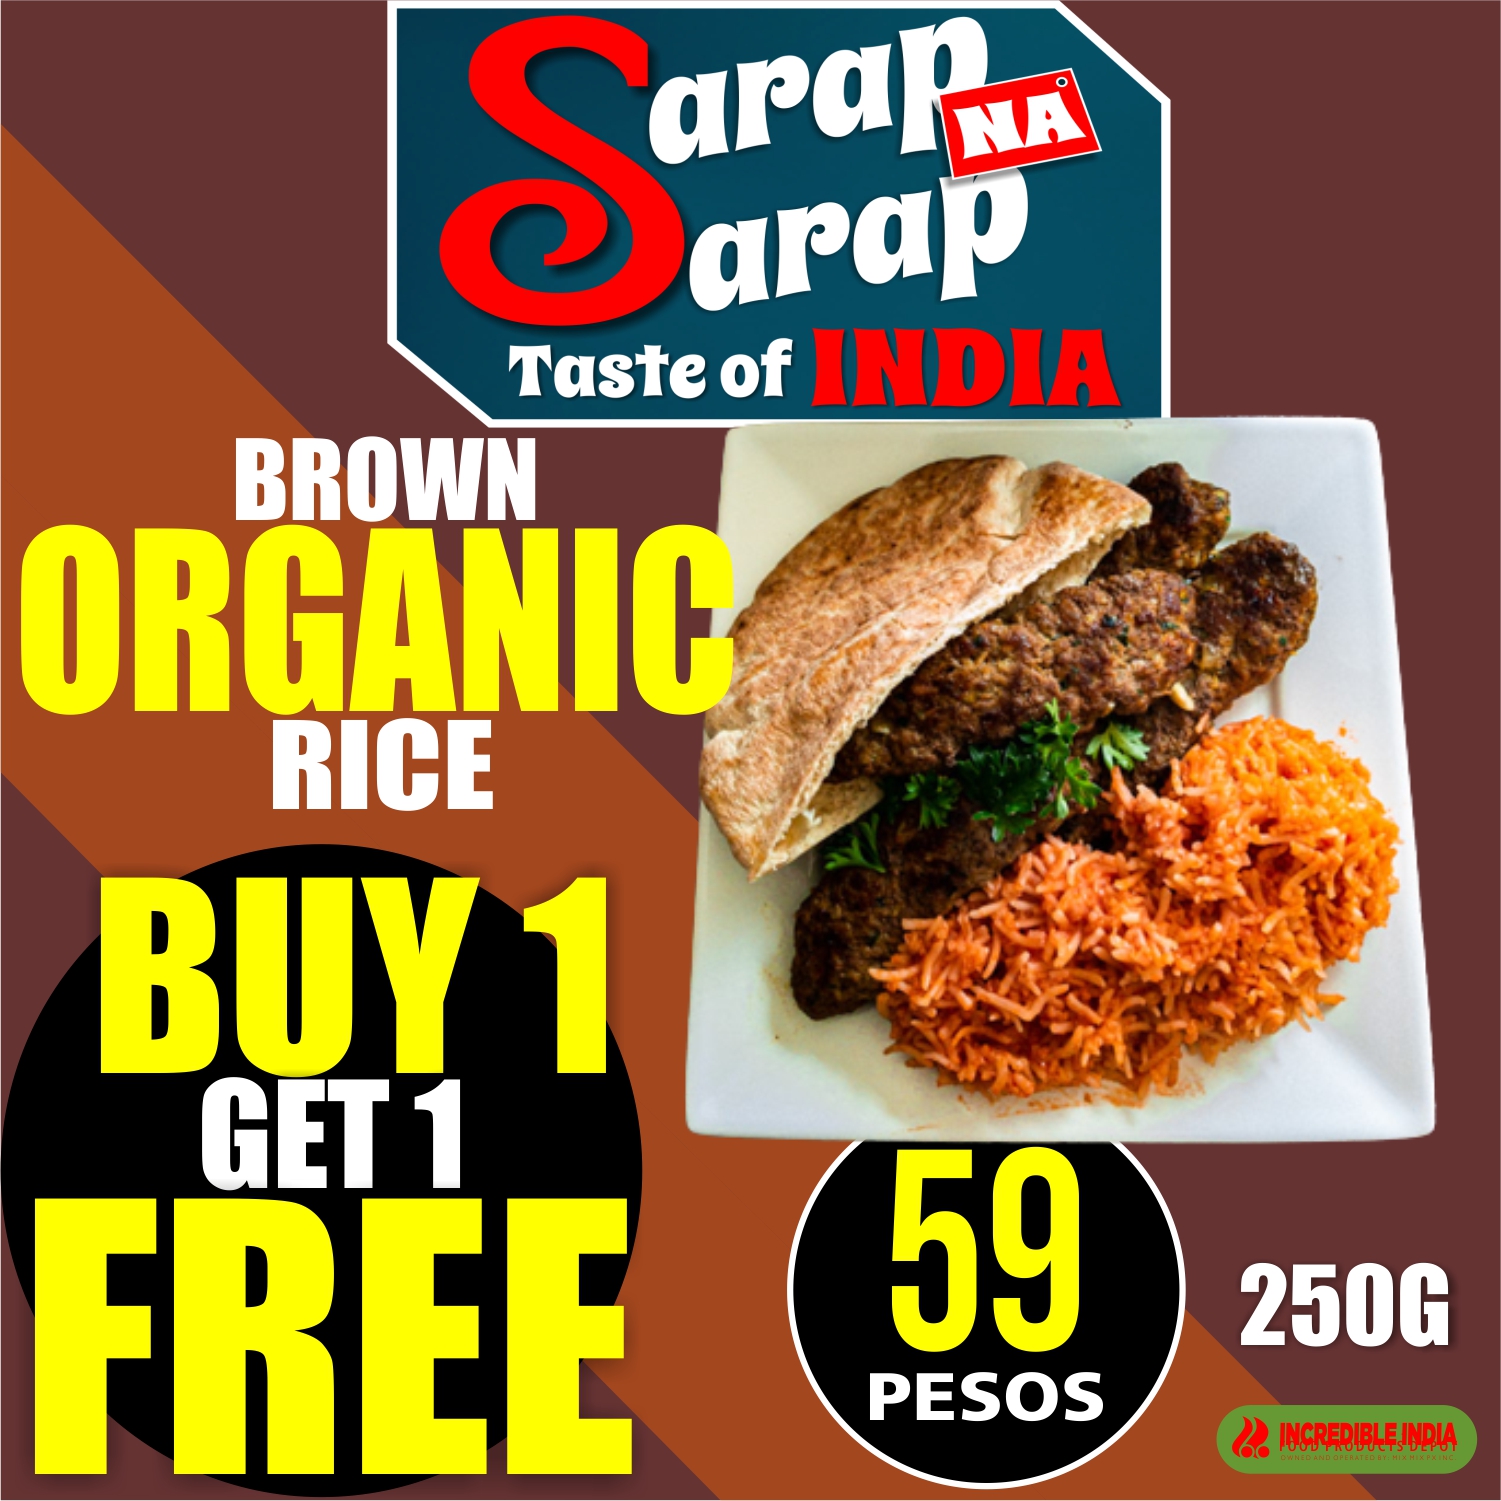 Sarap Na Sarap Brown Organic Rice 250g Buy 1 Get 1 Free This Is Not Basmati Rice Lazada Ph 7895